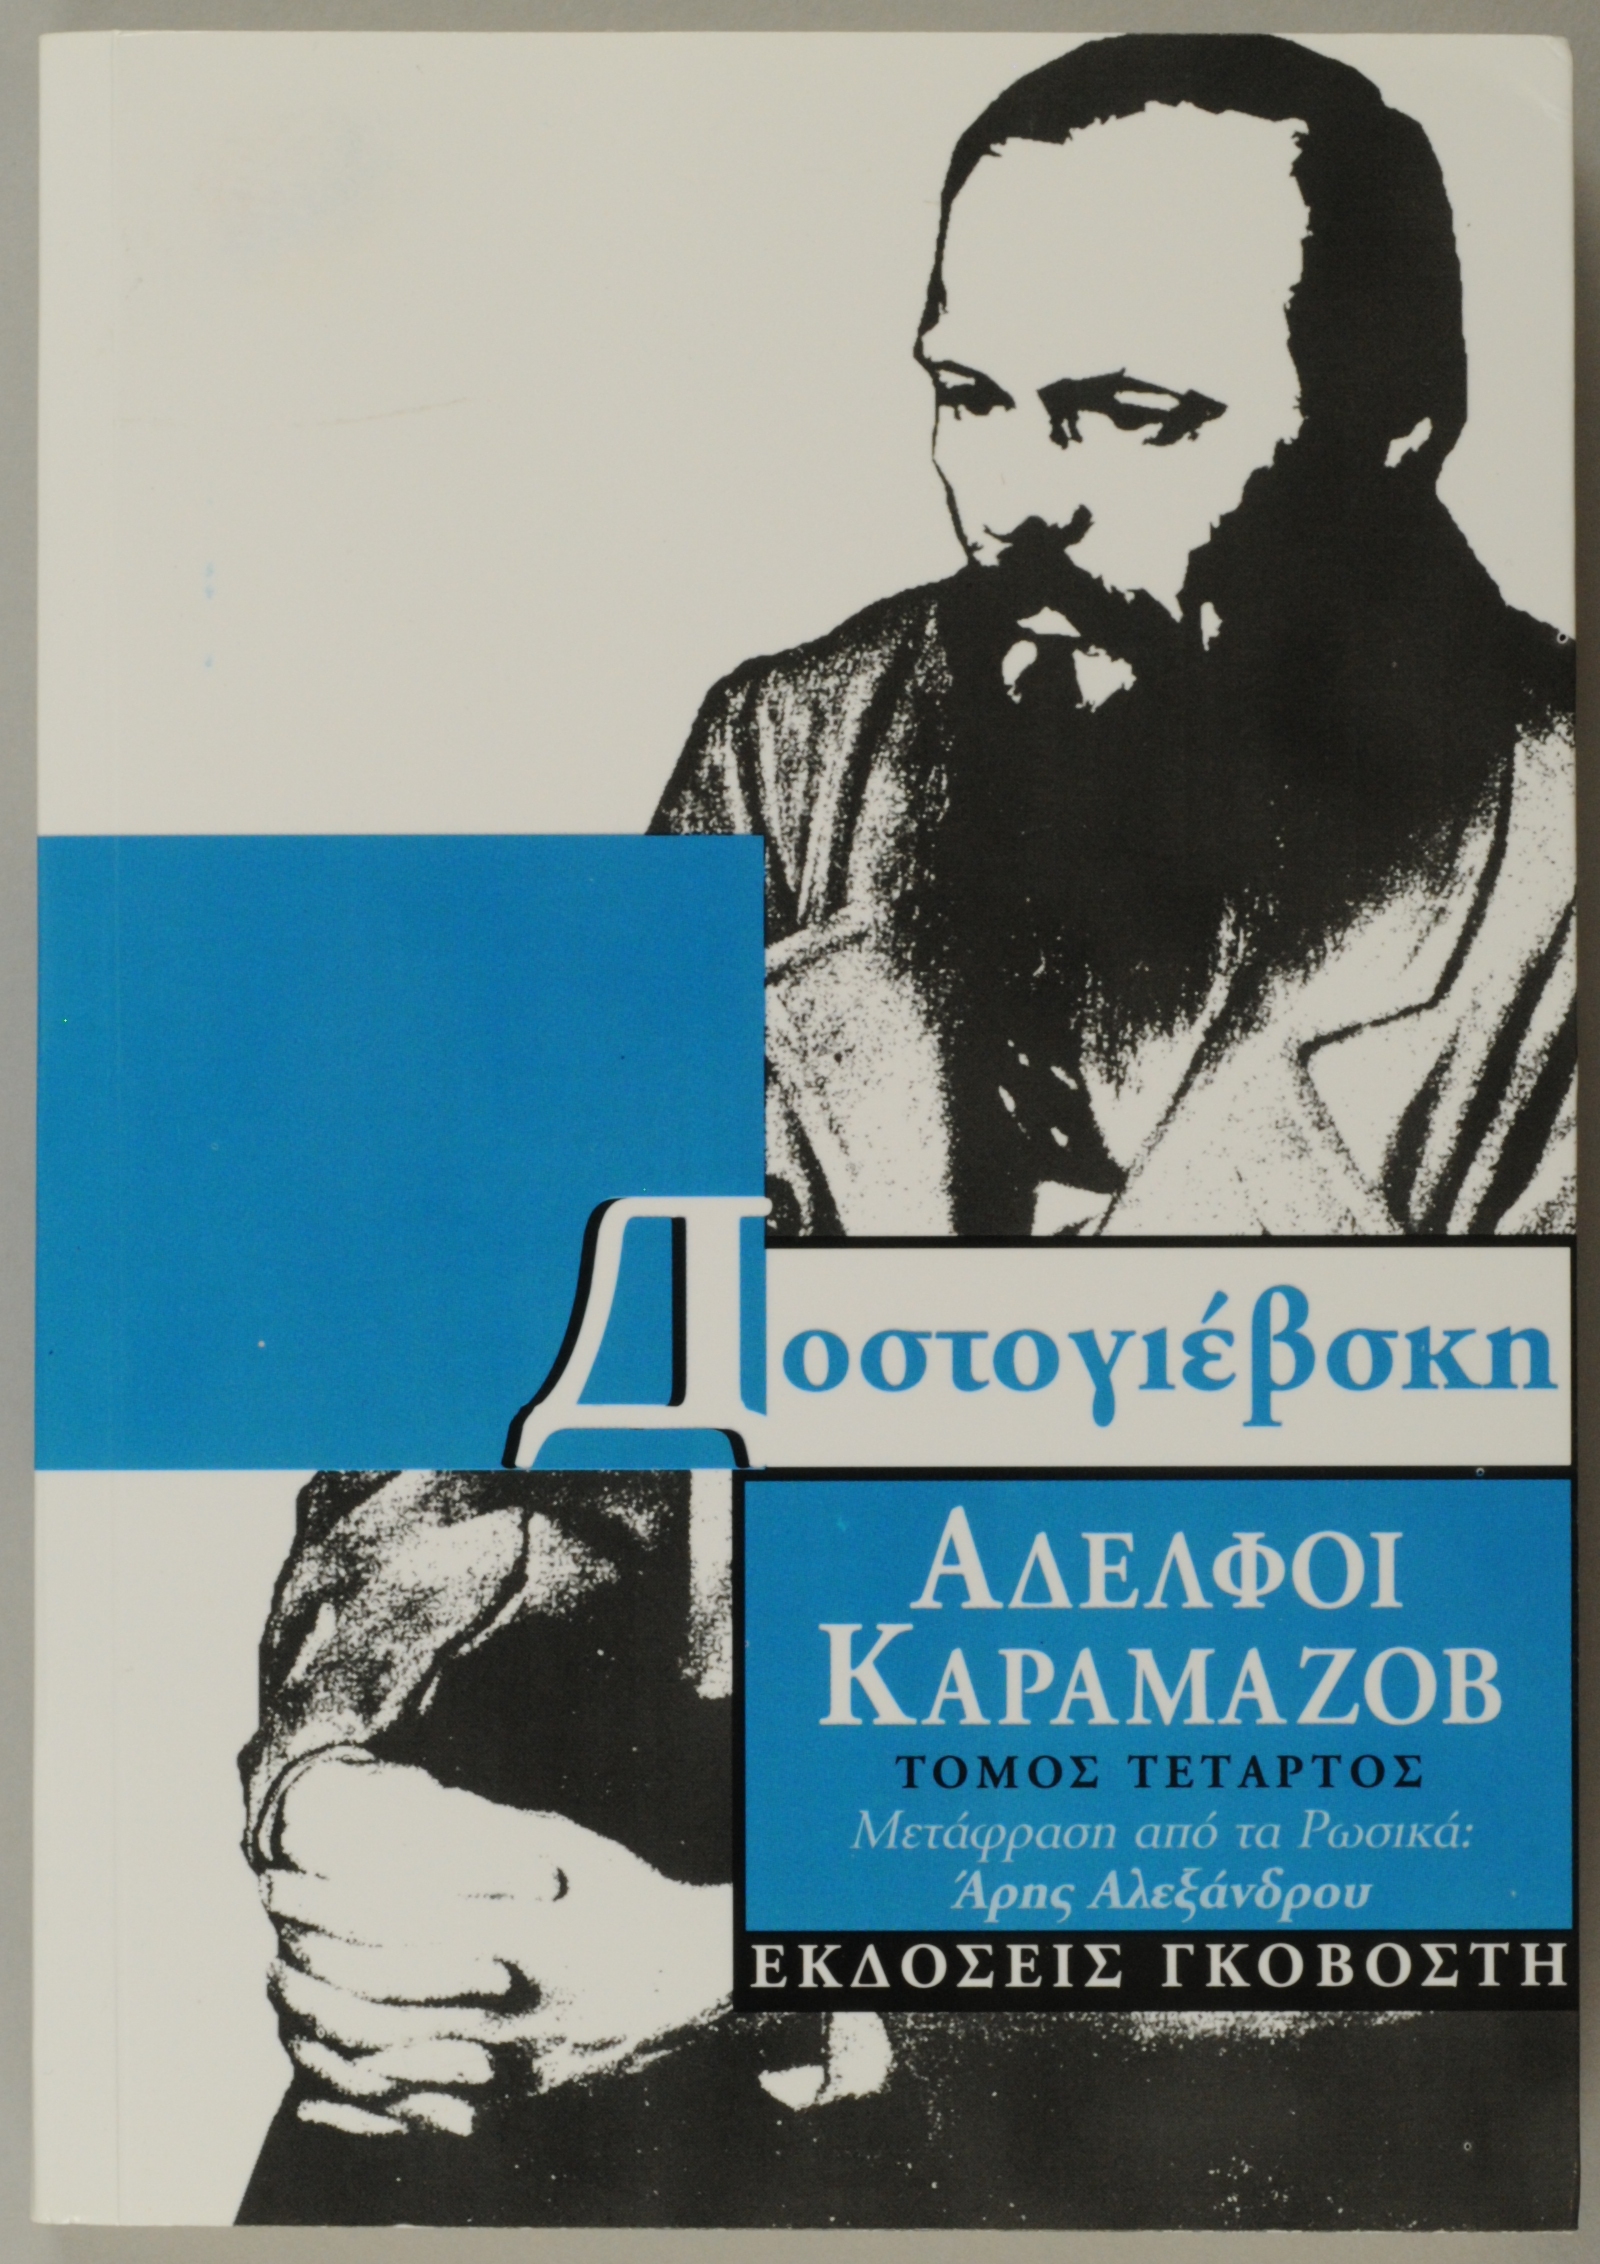 Cover of Karamazov brothers book